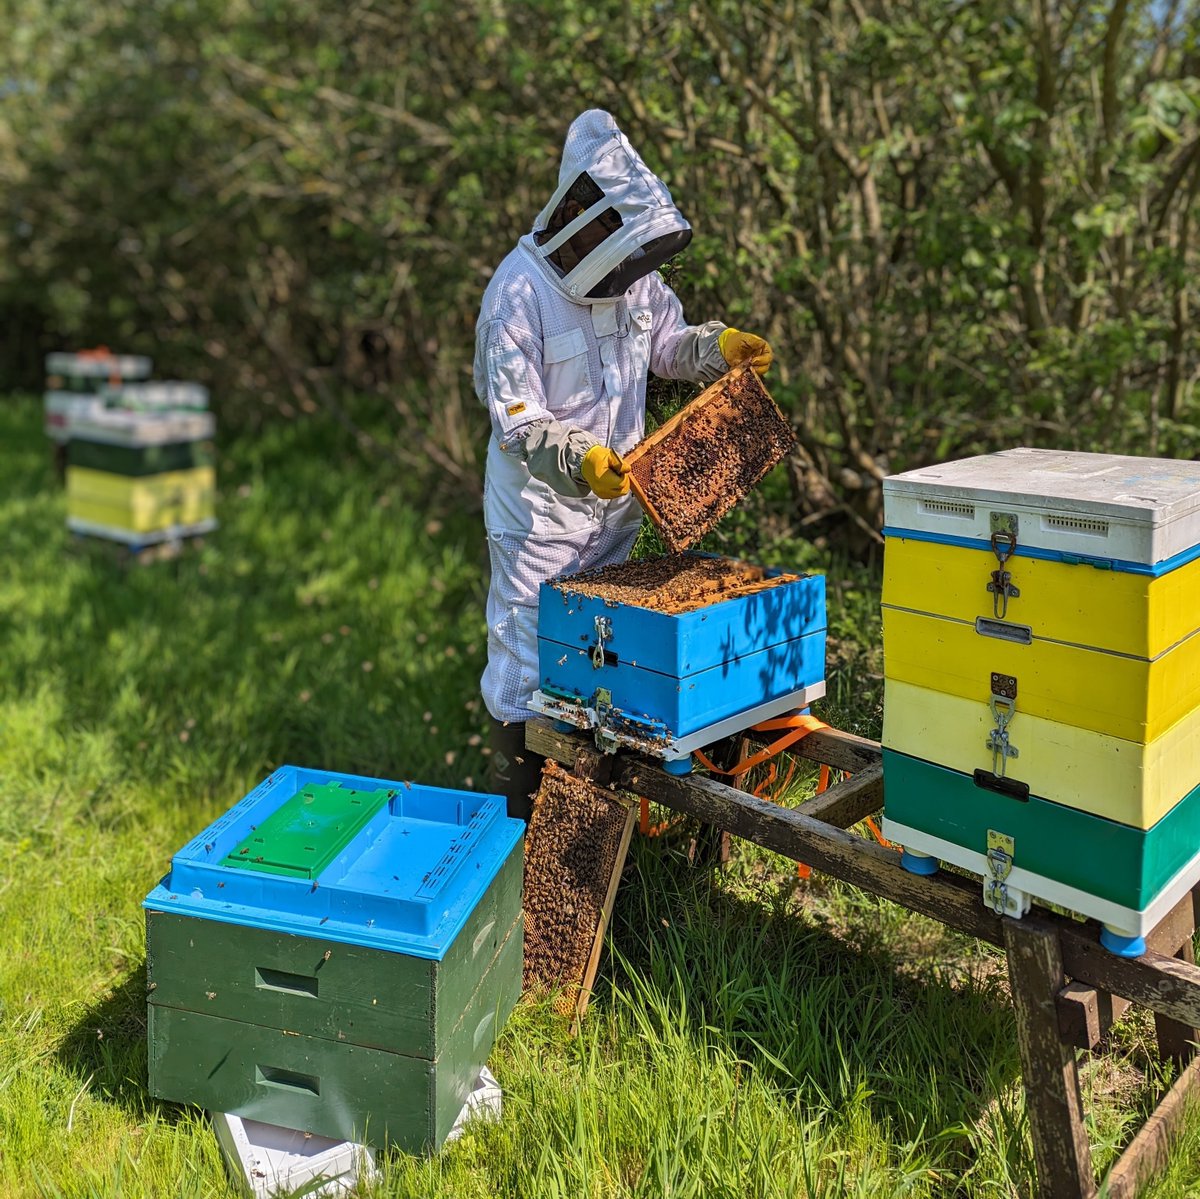 A sunny day for inspecting, at last!
#NorfolkHoneyCo
#StewartSpinks
#BeekeepingForAll
#Beekeeping
#Honeybees
#BeeFarmer
#Patreon